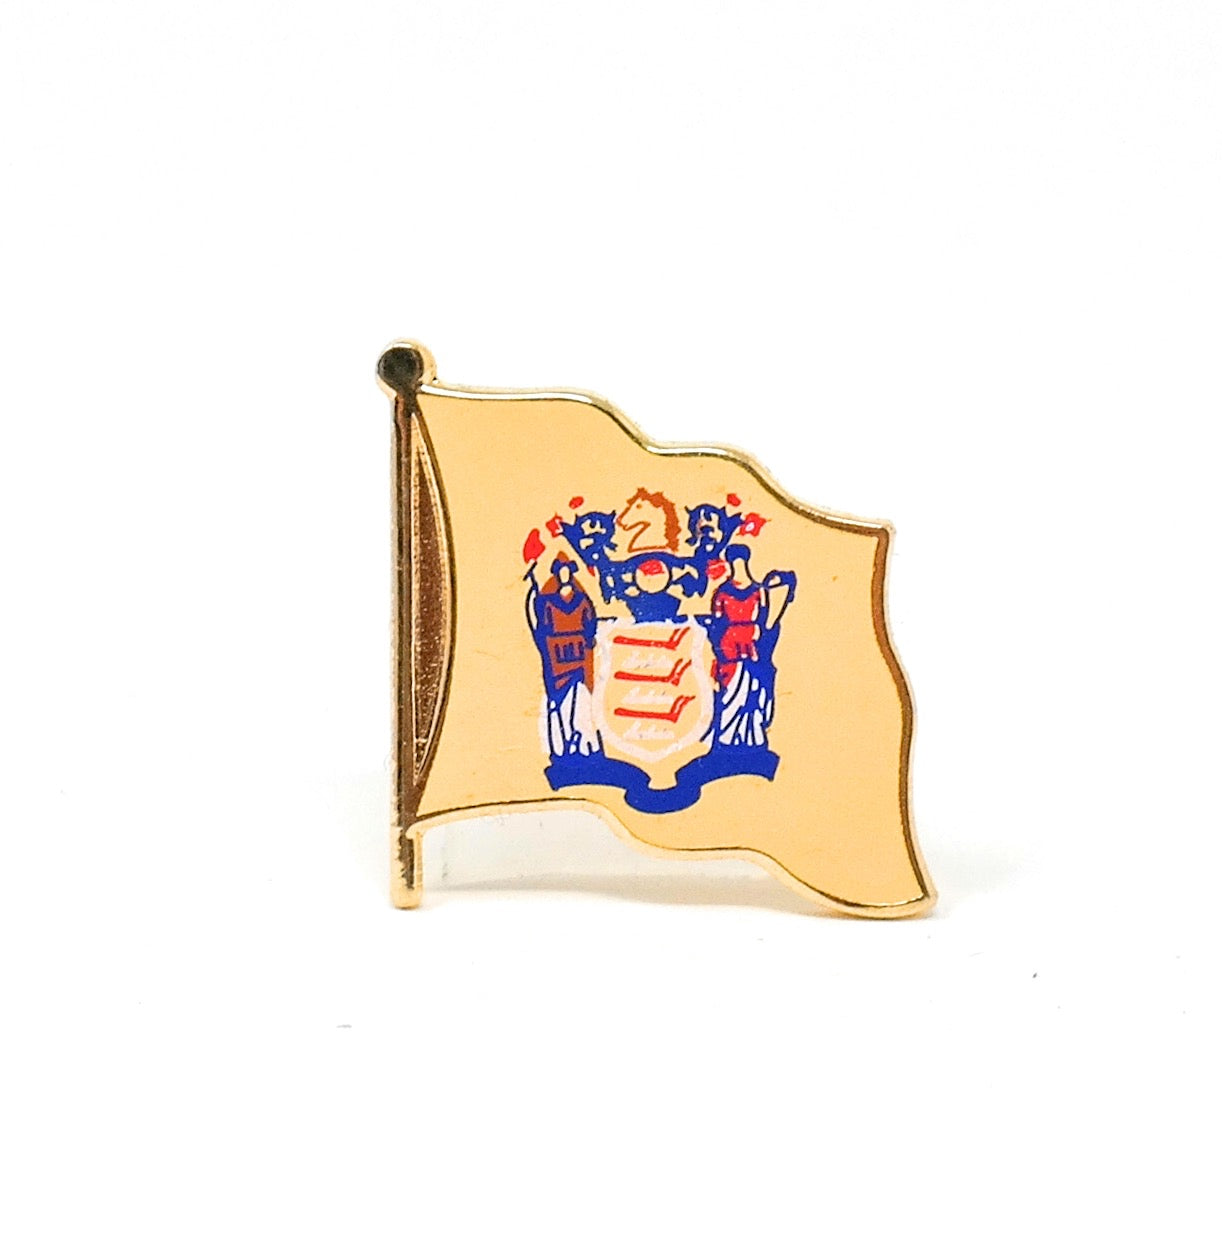 New Jersey State Lapel Pin